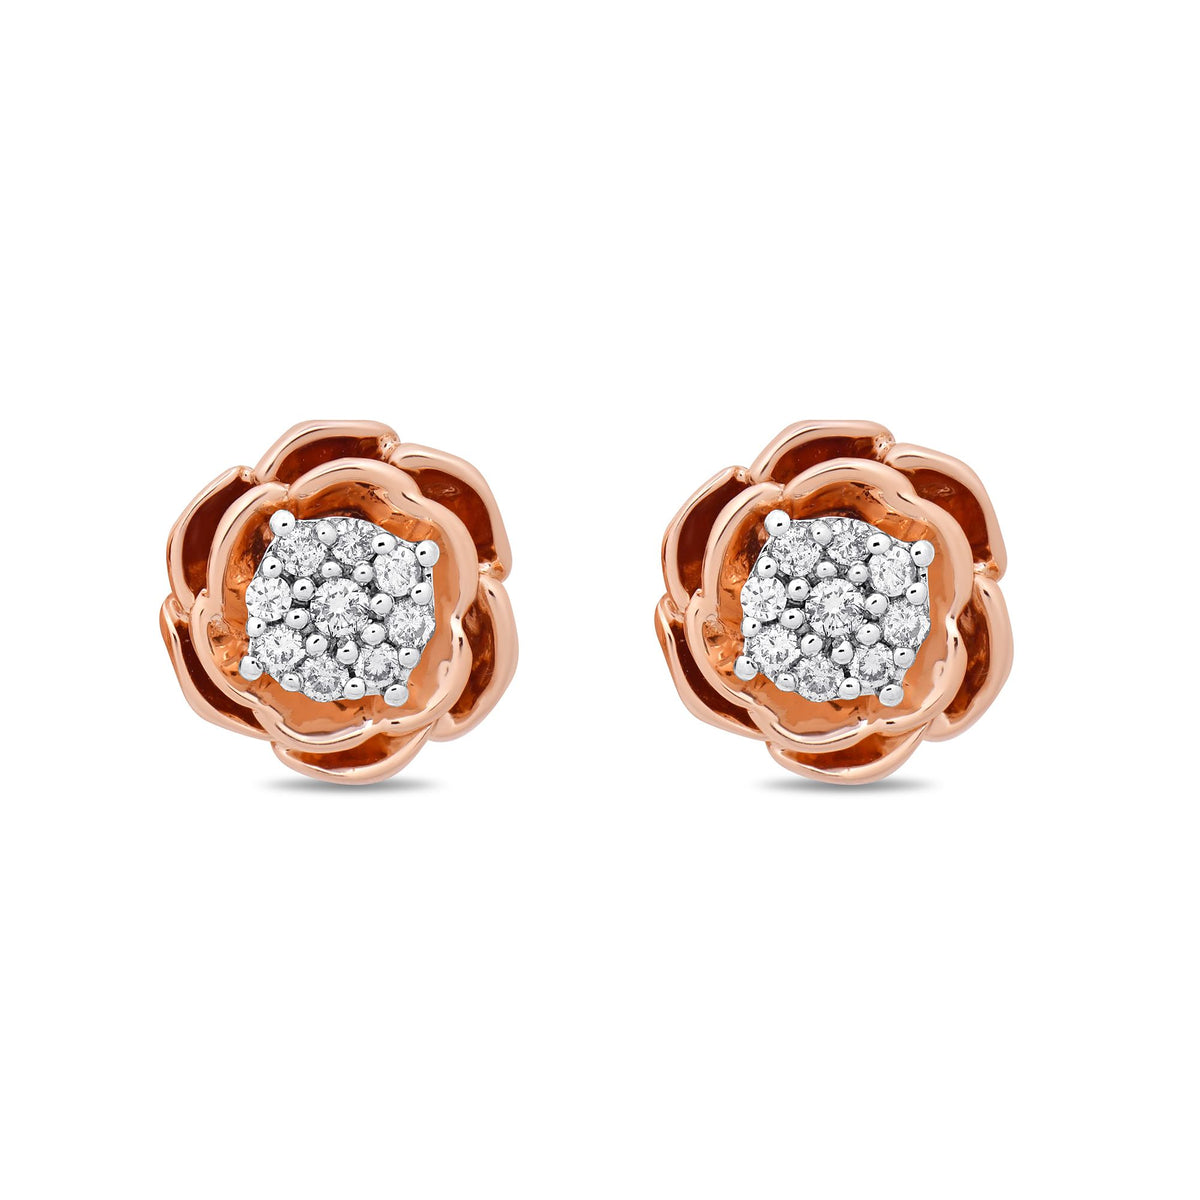 Avsar 14k (585) Rose Gold Stud Earrings for Women : Amazon.in: Fashion